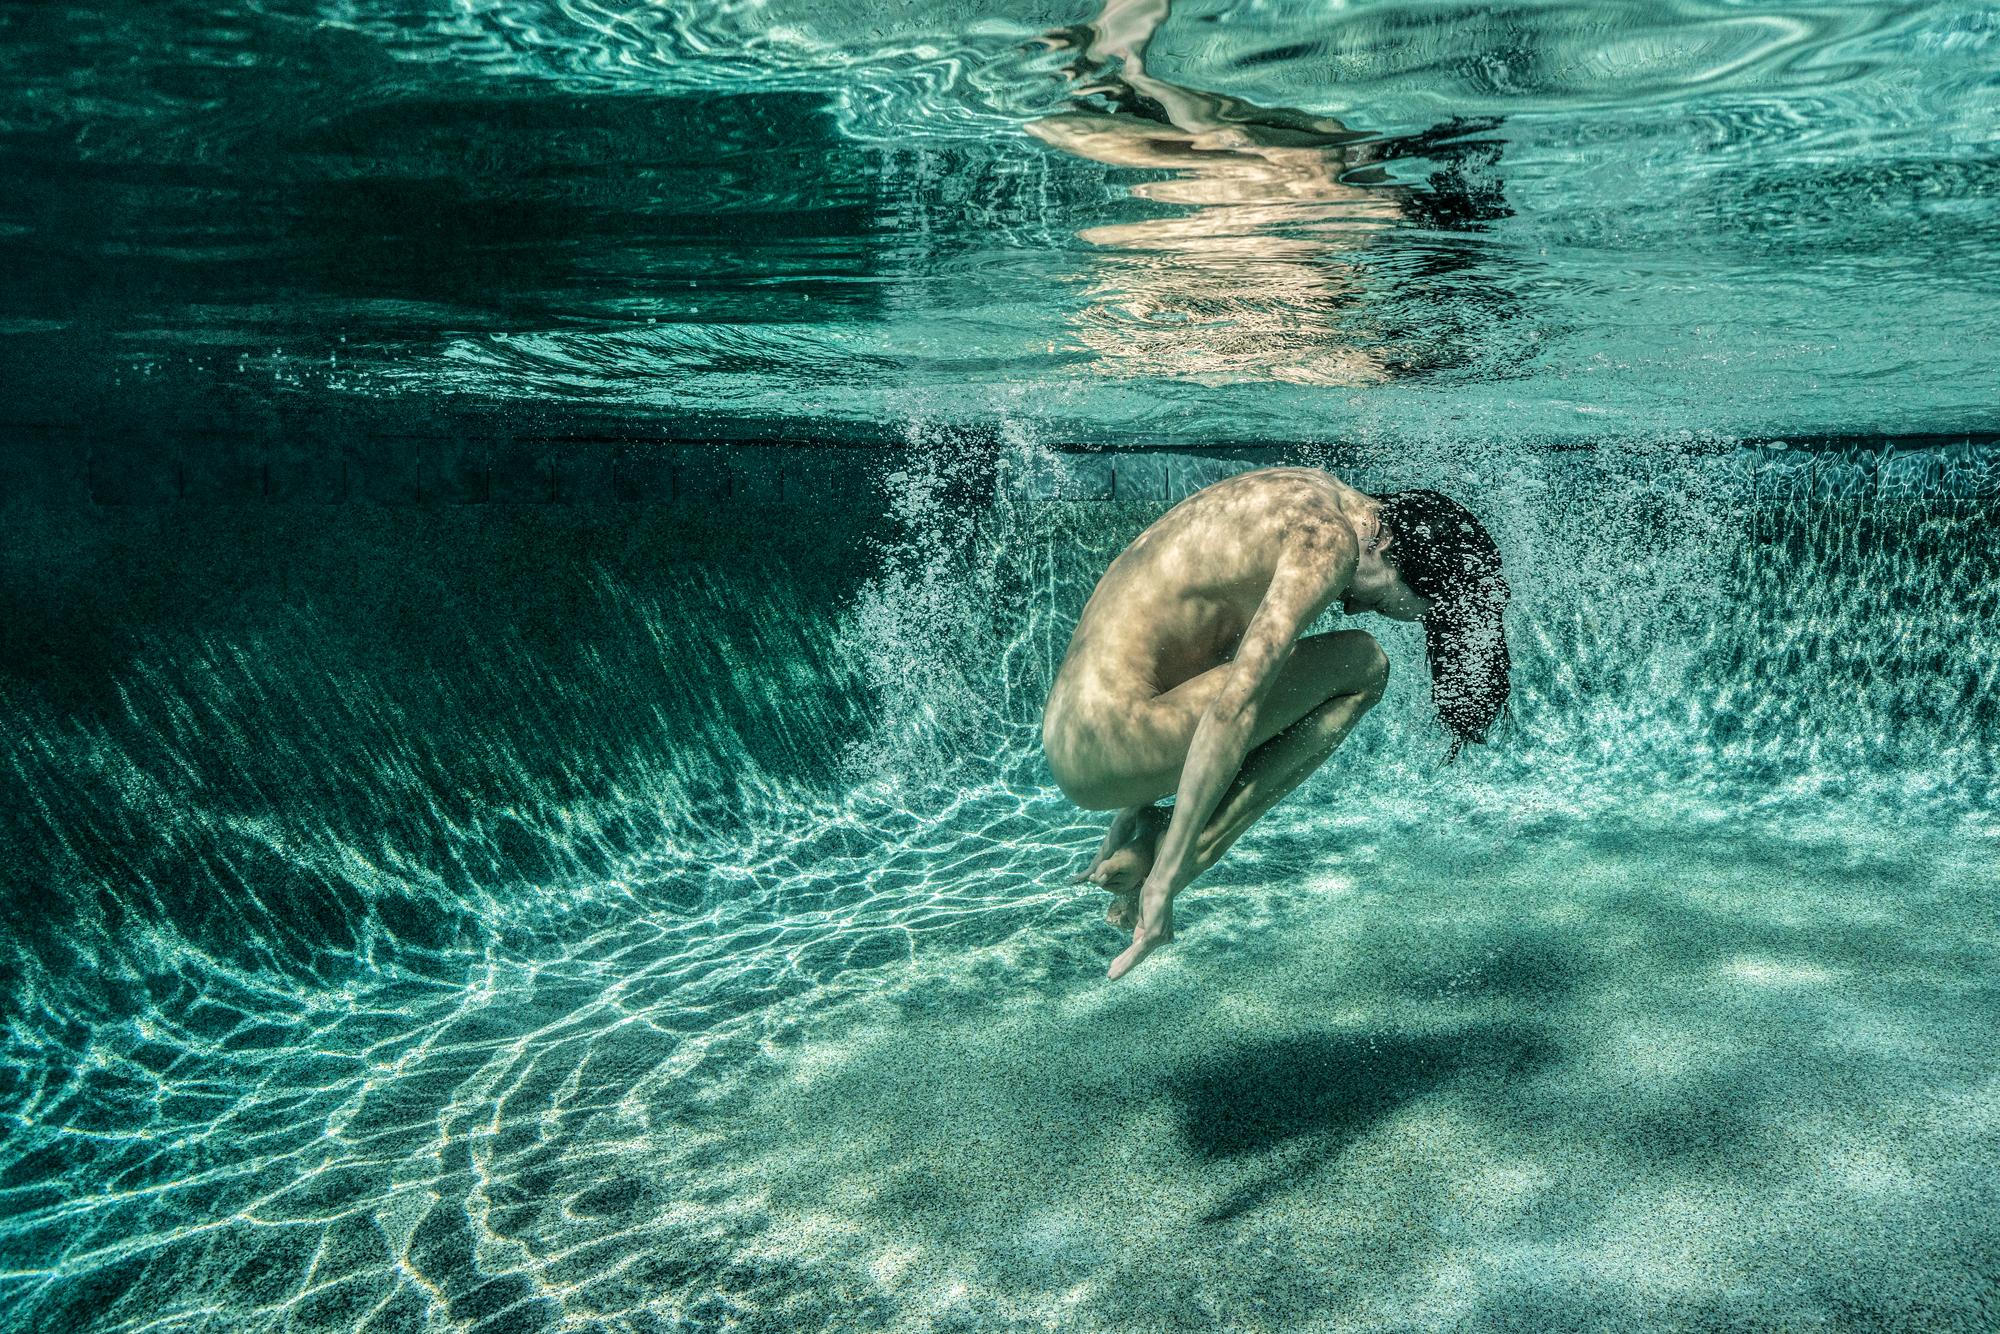 al chin add nude woman underwater photo